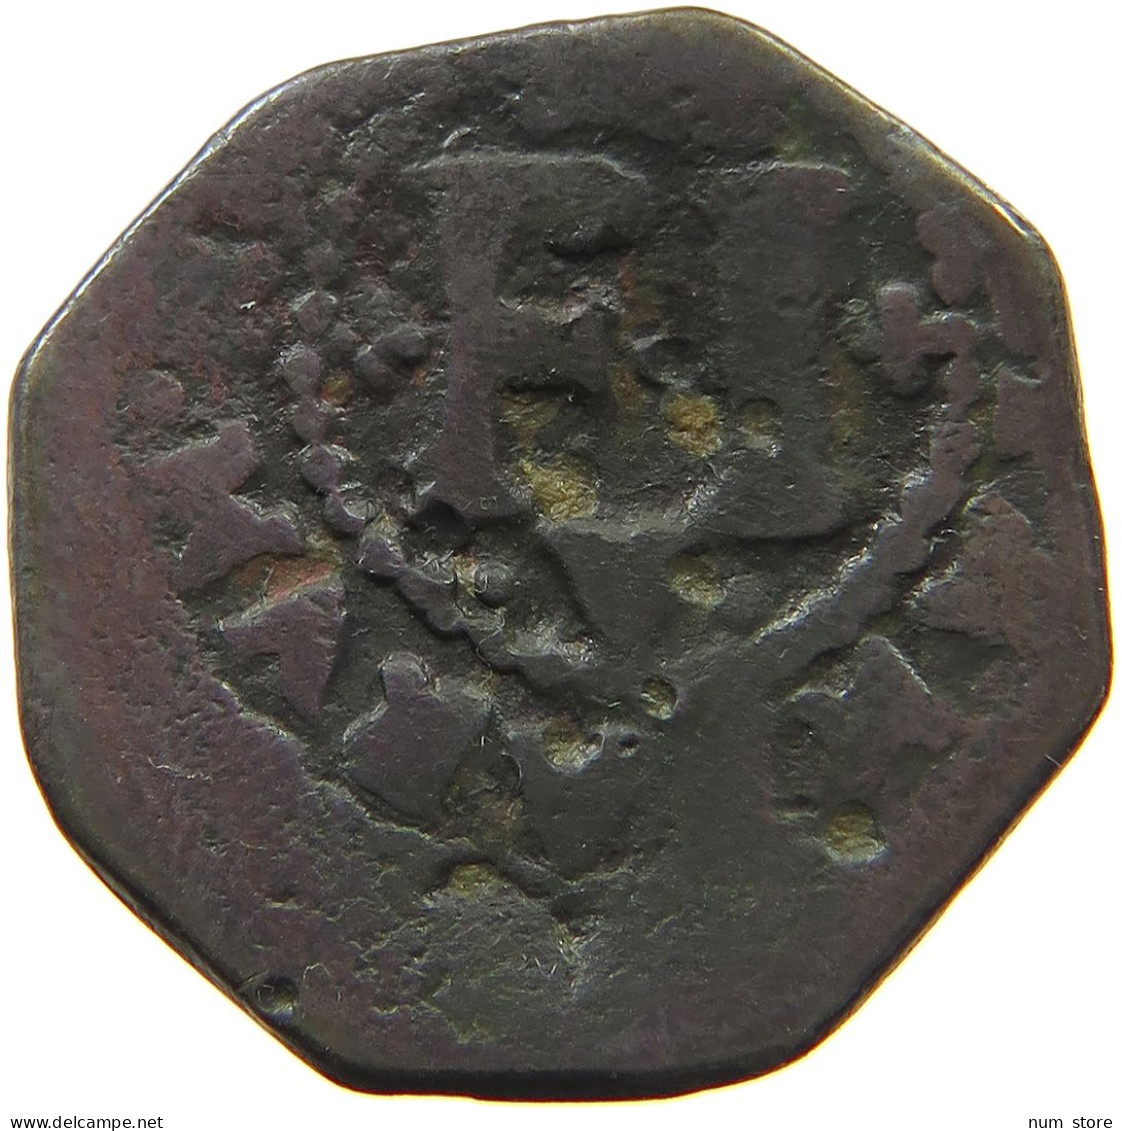 SPAIN NAVARRA MARAVEDI 1728 PAMPLONA #t124 0143 - Münzen Der Provinzen